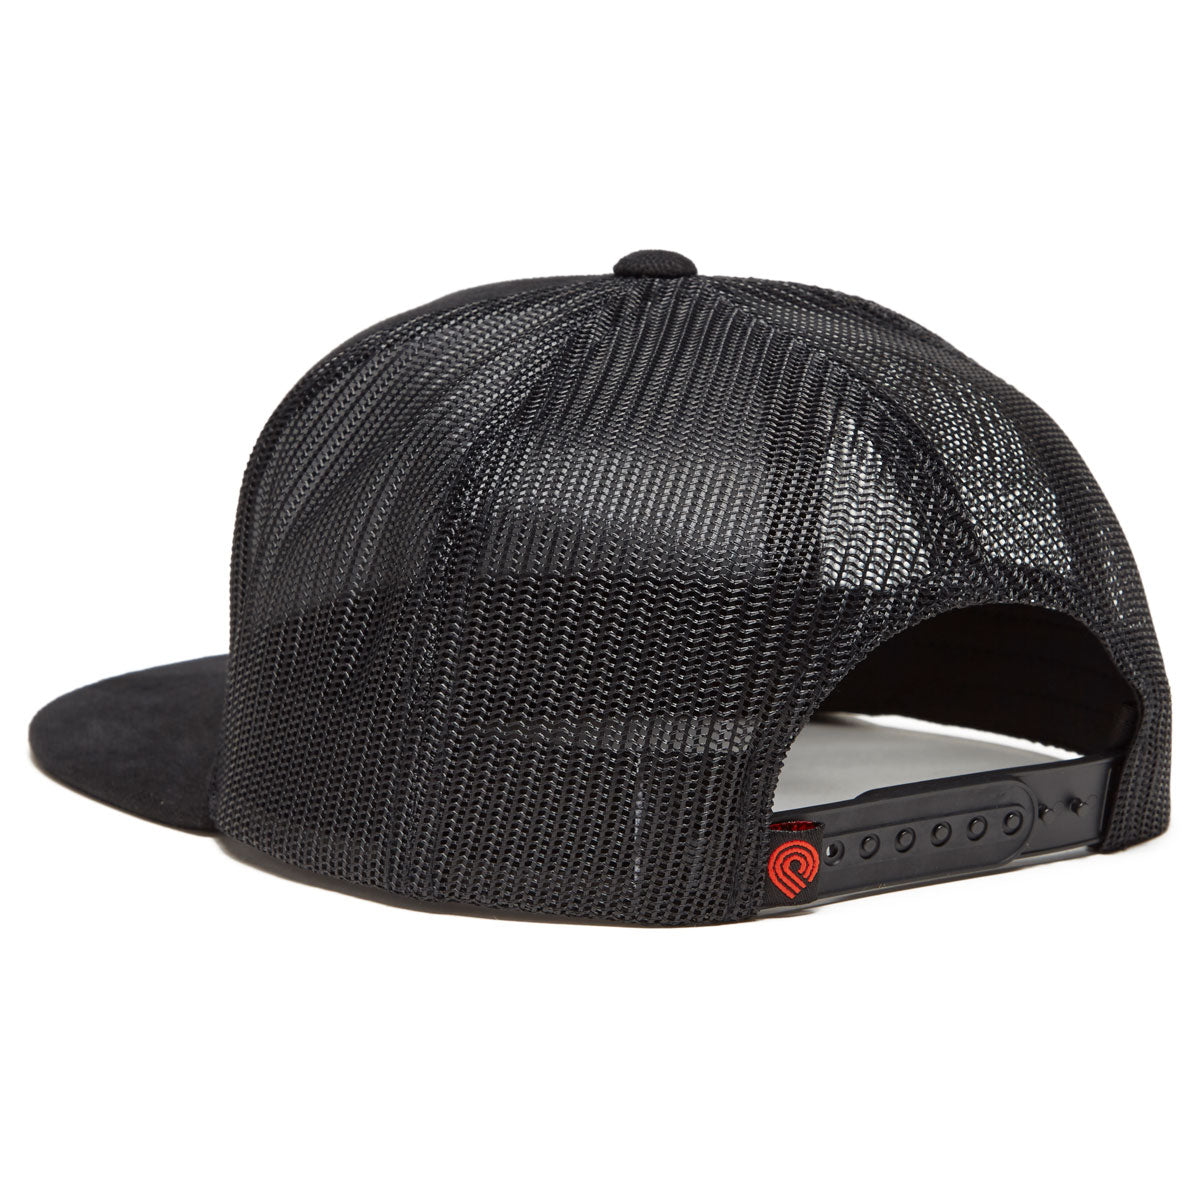 Powell-Peralta Ripper Trucker Hat - Black image 2